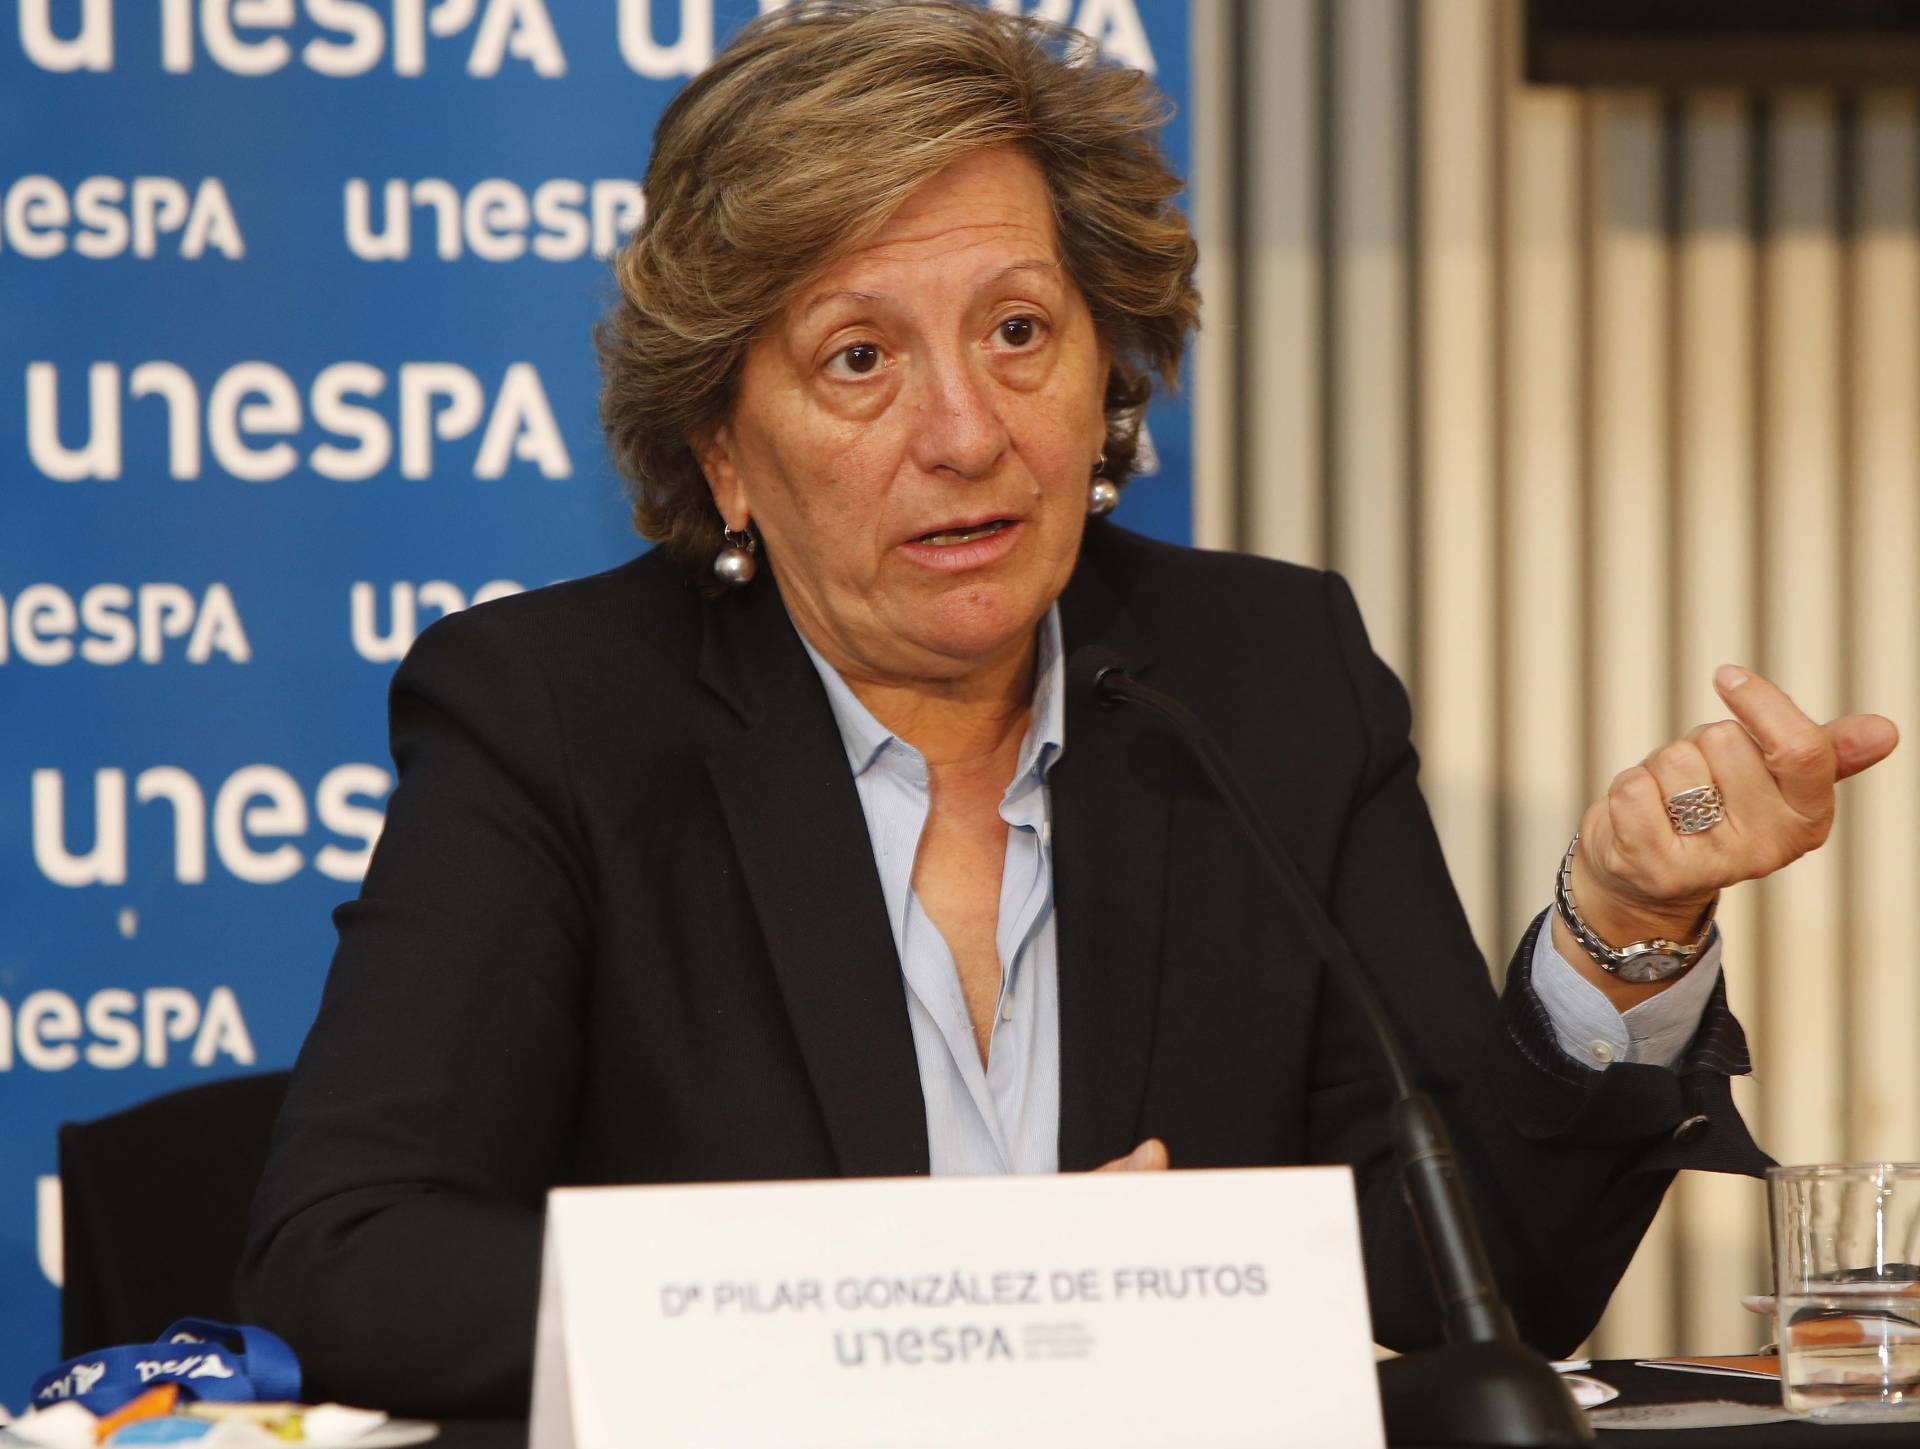 La presidenta de Unespa, Pilar González de Frutos.